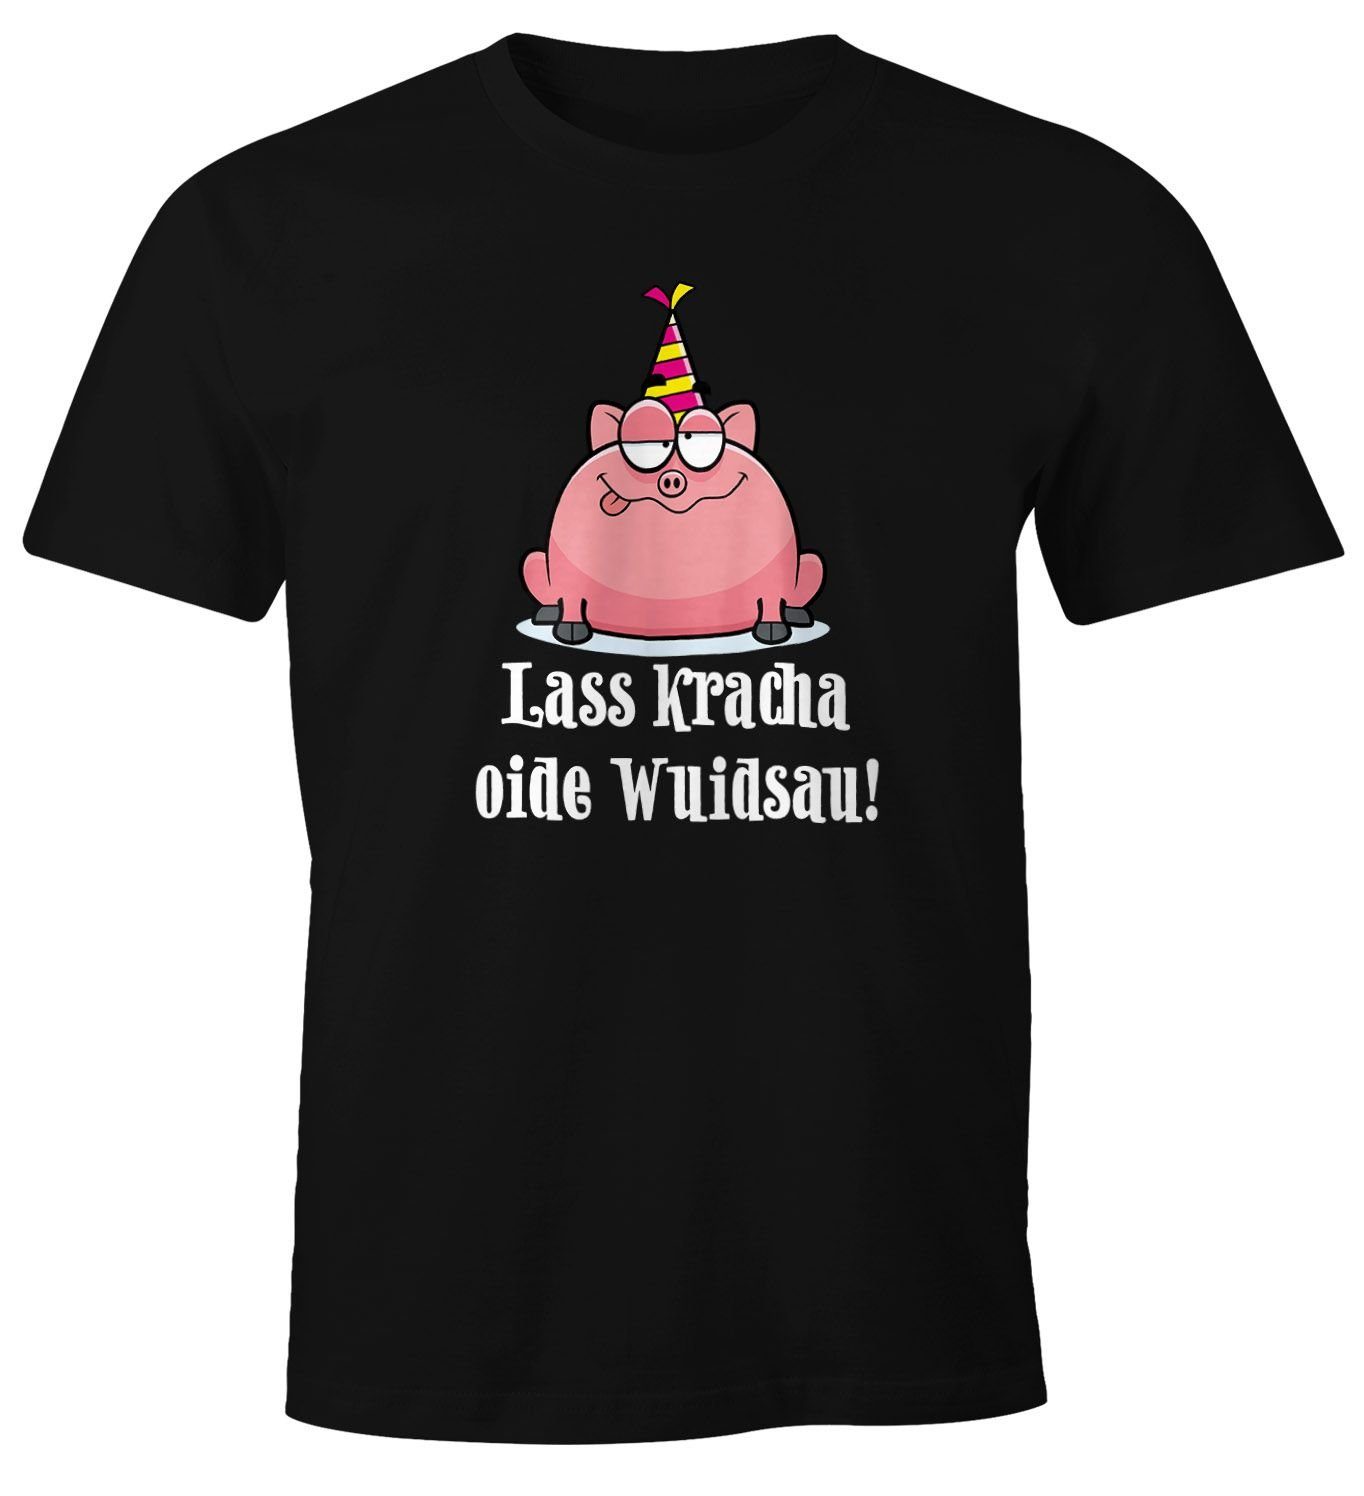 MoonWorks Print-Shirt Herren T-Shirt Geburtstag Schwein Spruch Lass kracha oide Wuidsau Fun-Shirt Geschenk Moonworks® mit Print schwarz